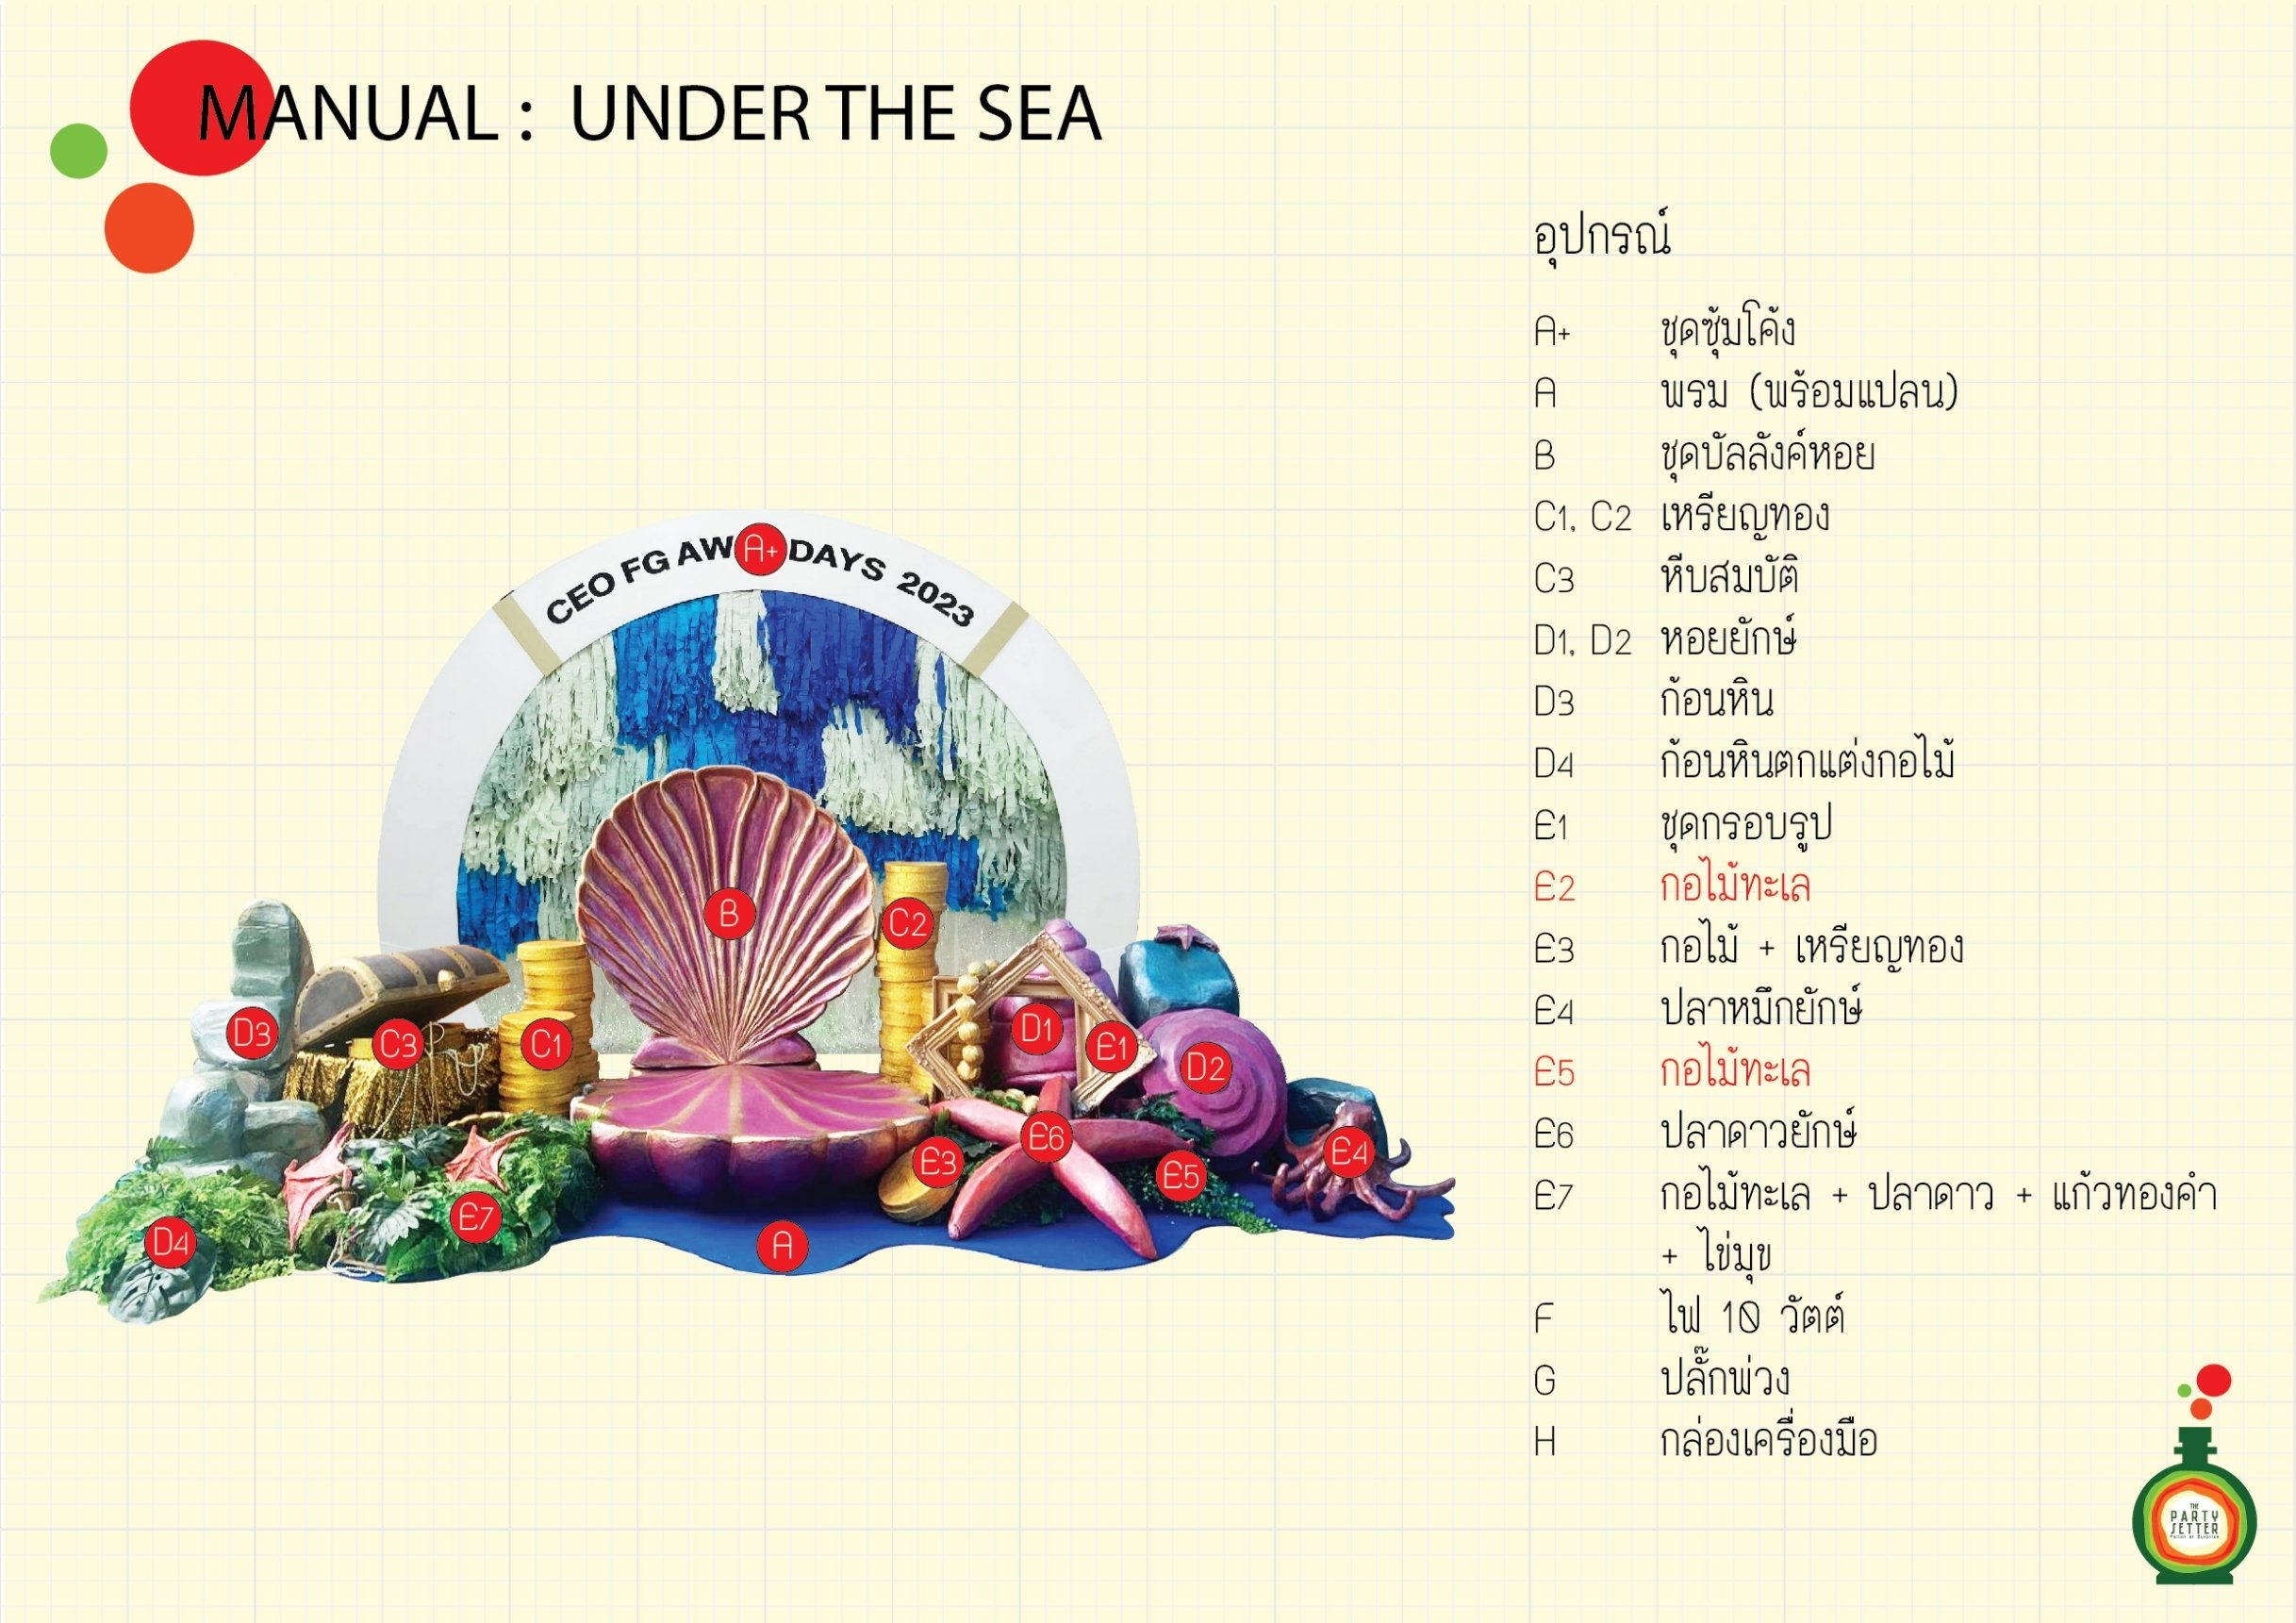 Manual_Under the Sea-00-01.jpg